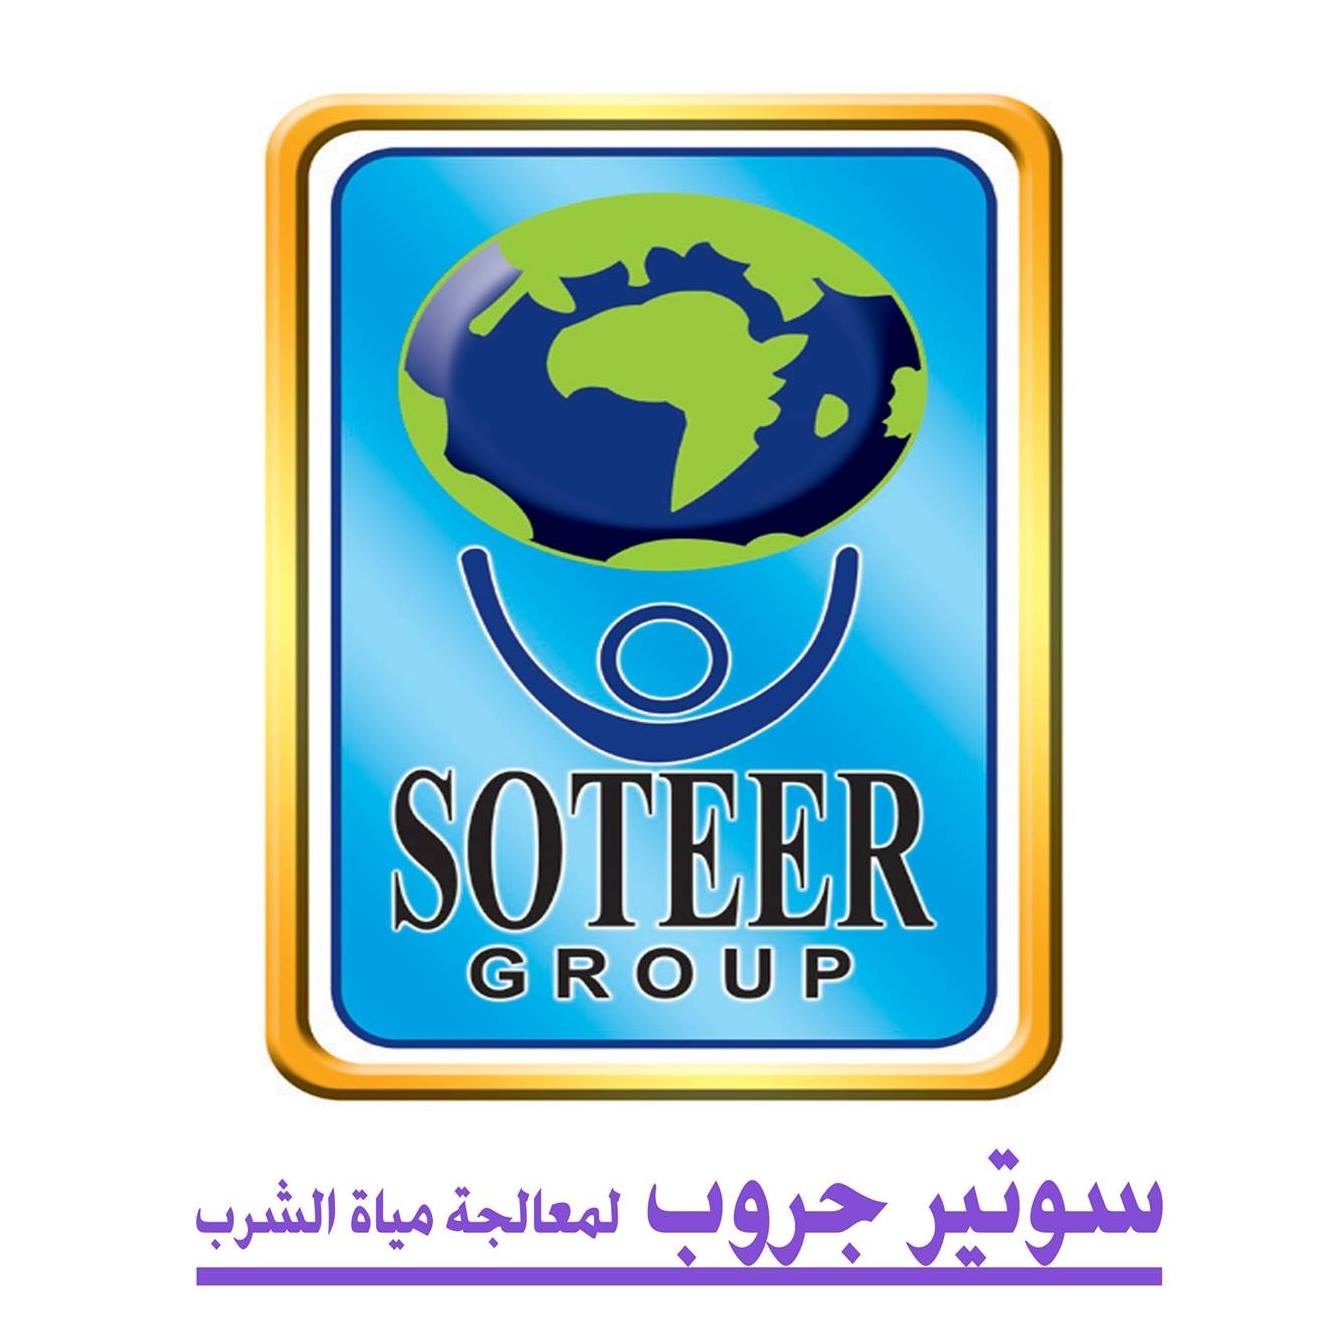 Soteer Group - logo